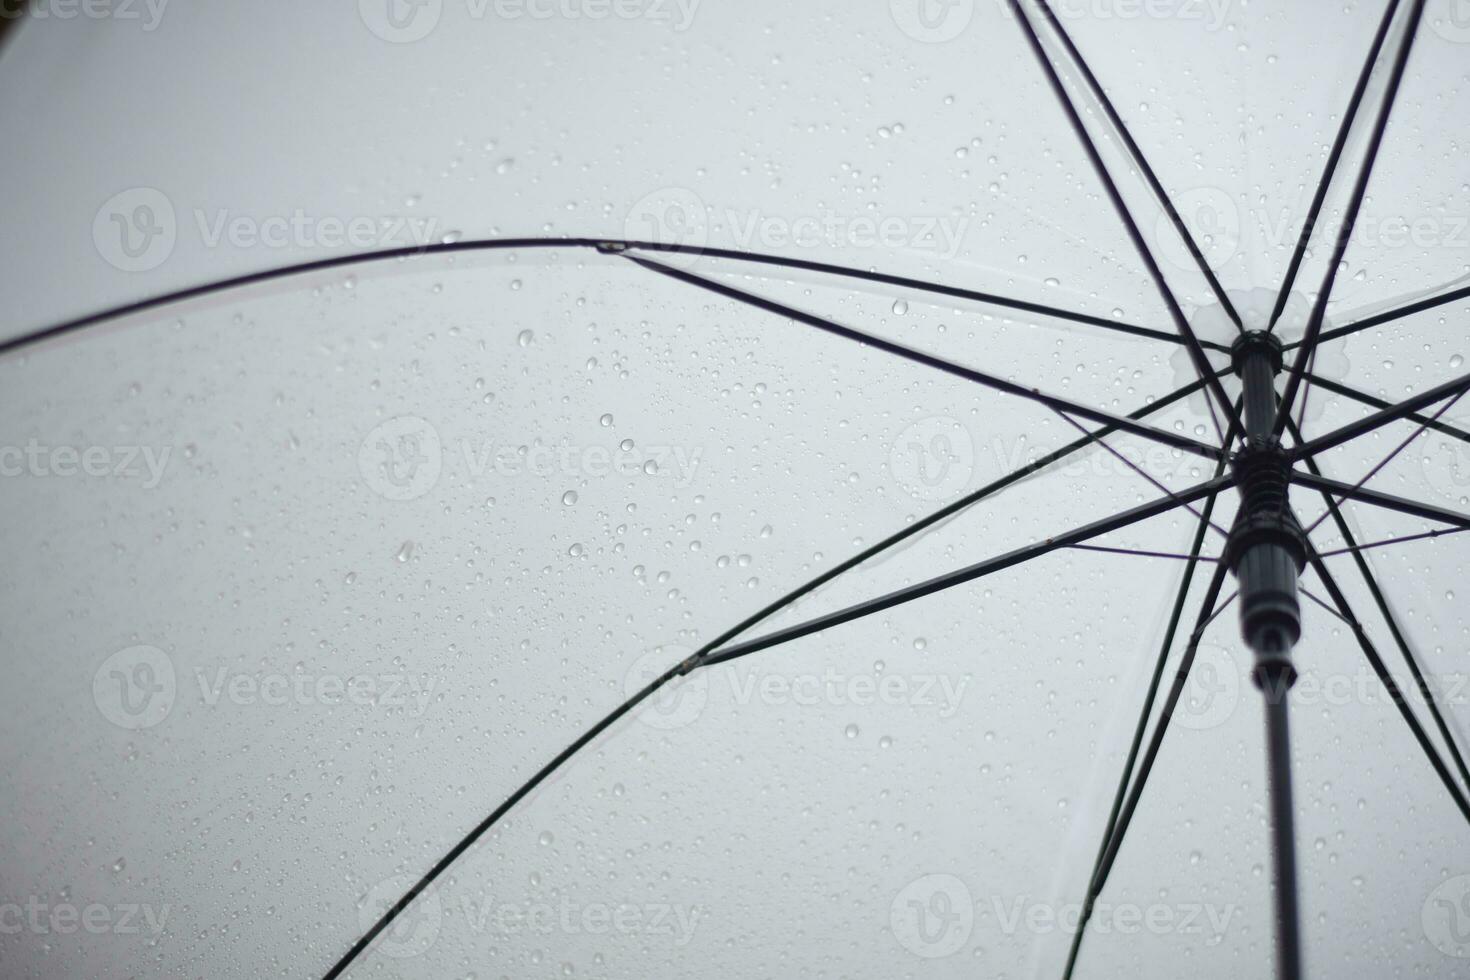 lluvia soltar en sombrilla. lluvioso temporada concepto. foto